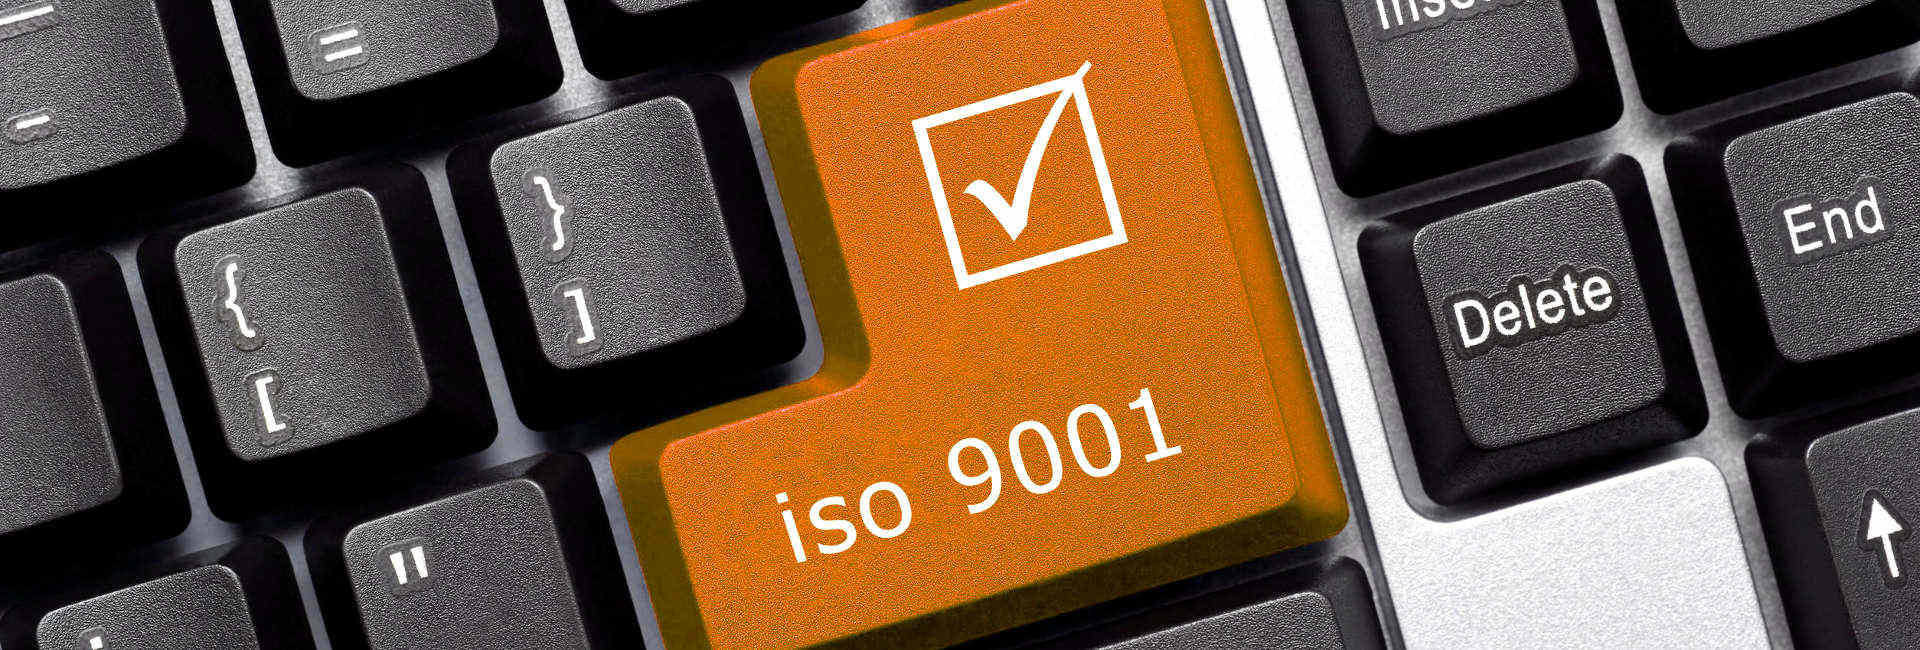 Certificazione di ISO 9001:2015 di Adgenera per garantire la Qualità ai nostri Clienti